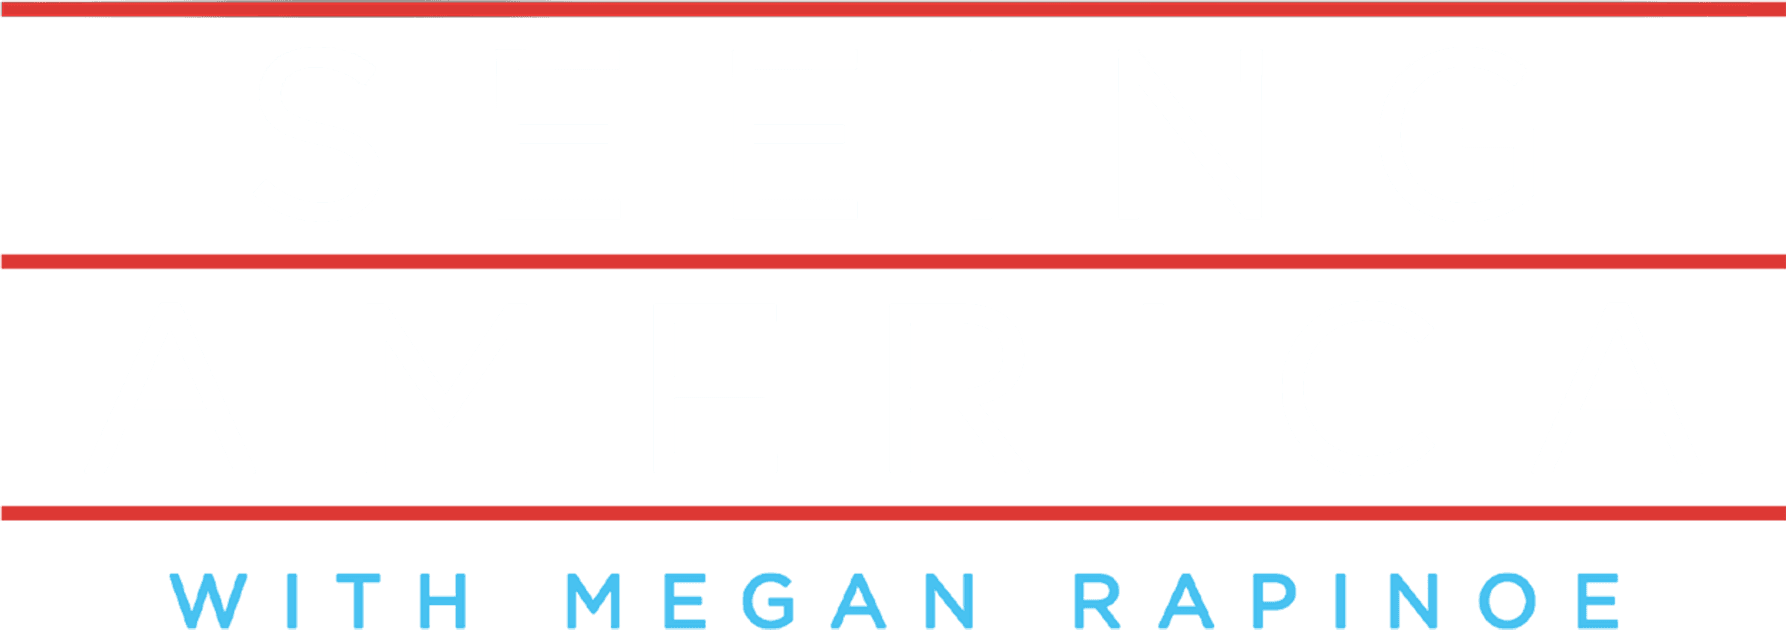 Seeing America with Megan Rapinoe logo